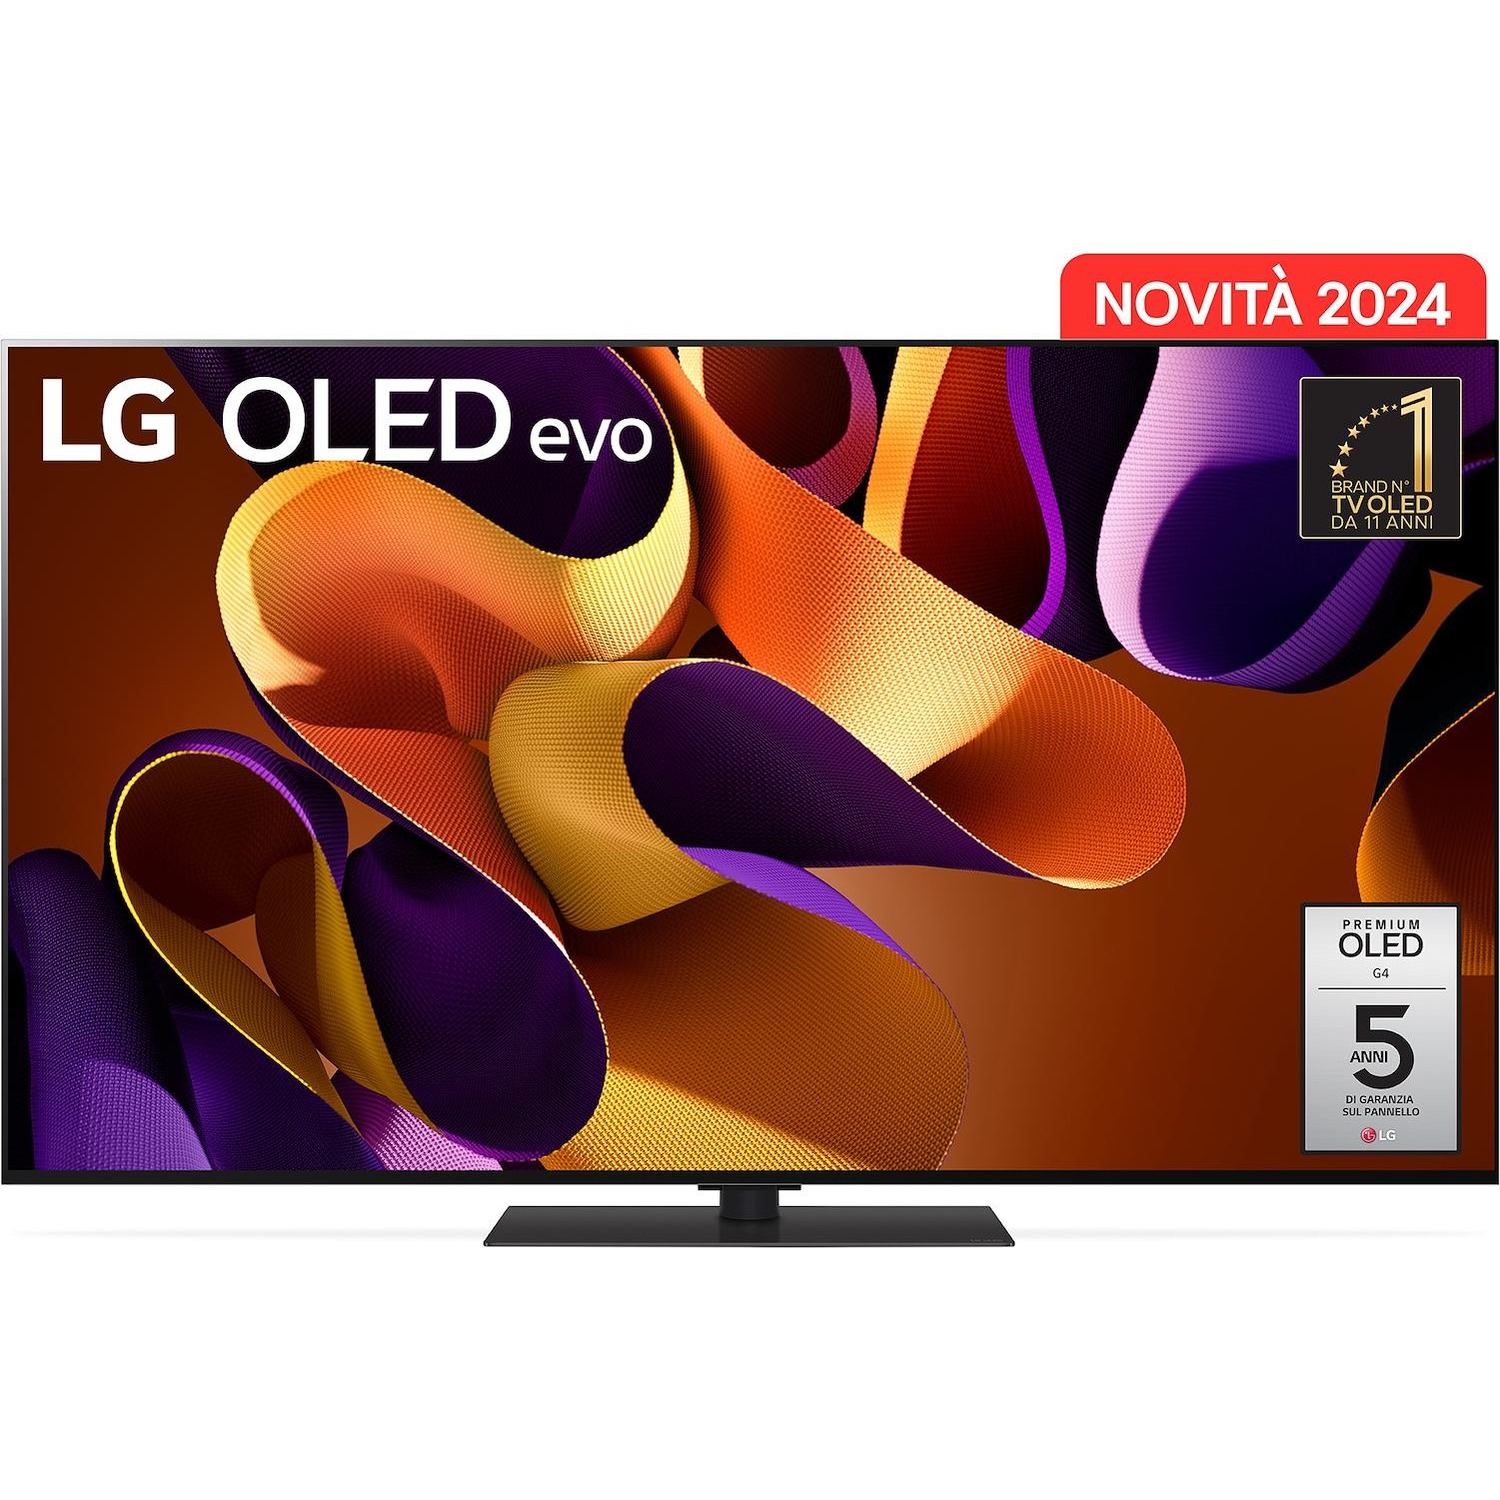 Immagine per TV OLED 4K Smart LG OLED55G46 da DIMOStore